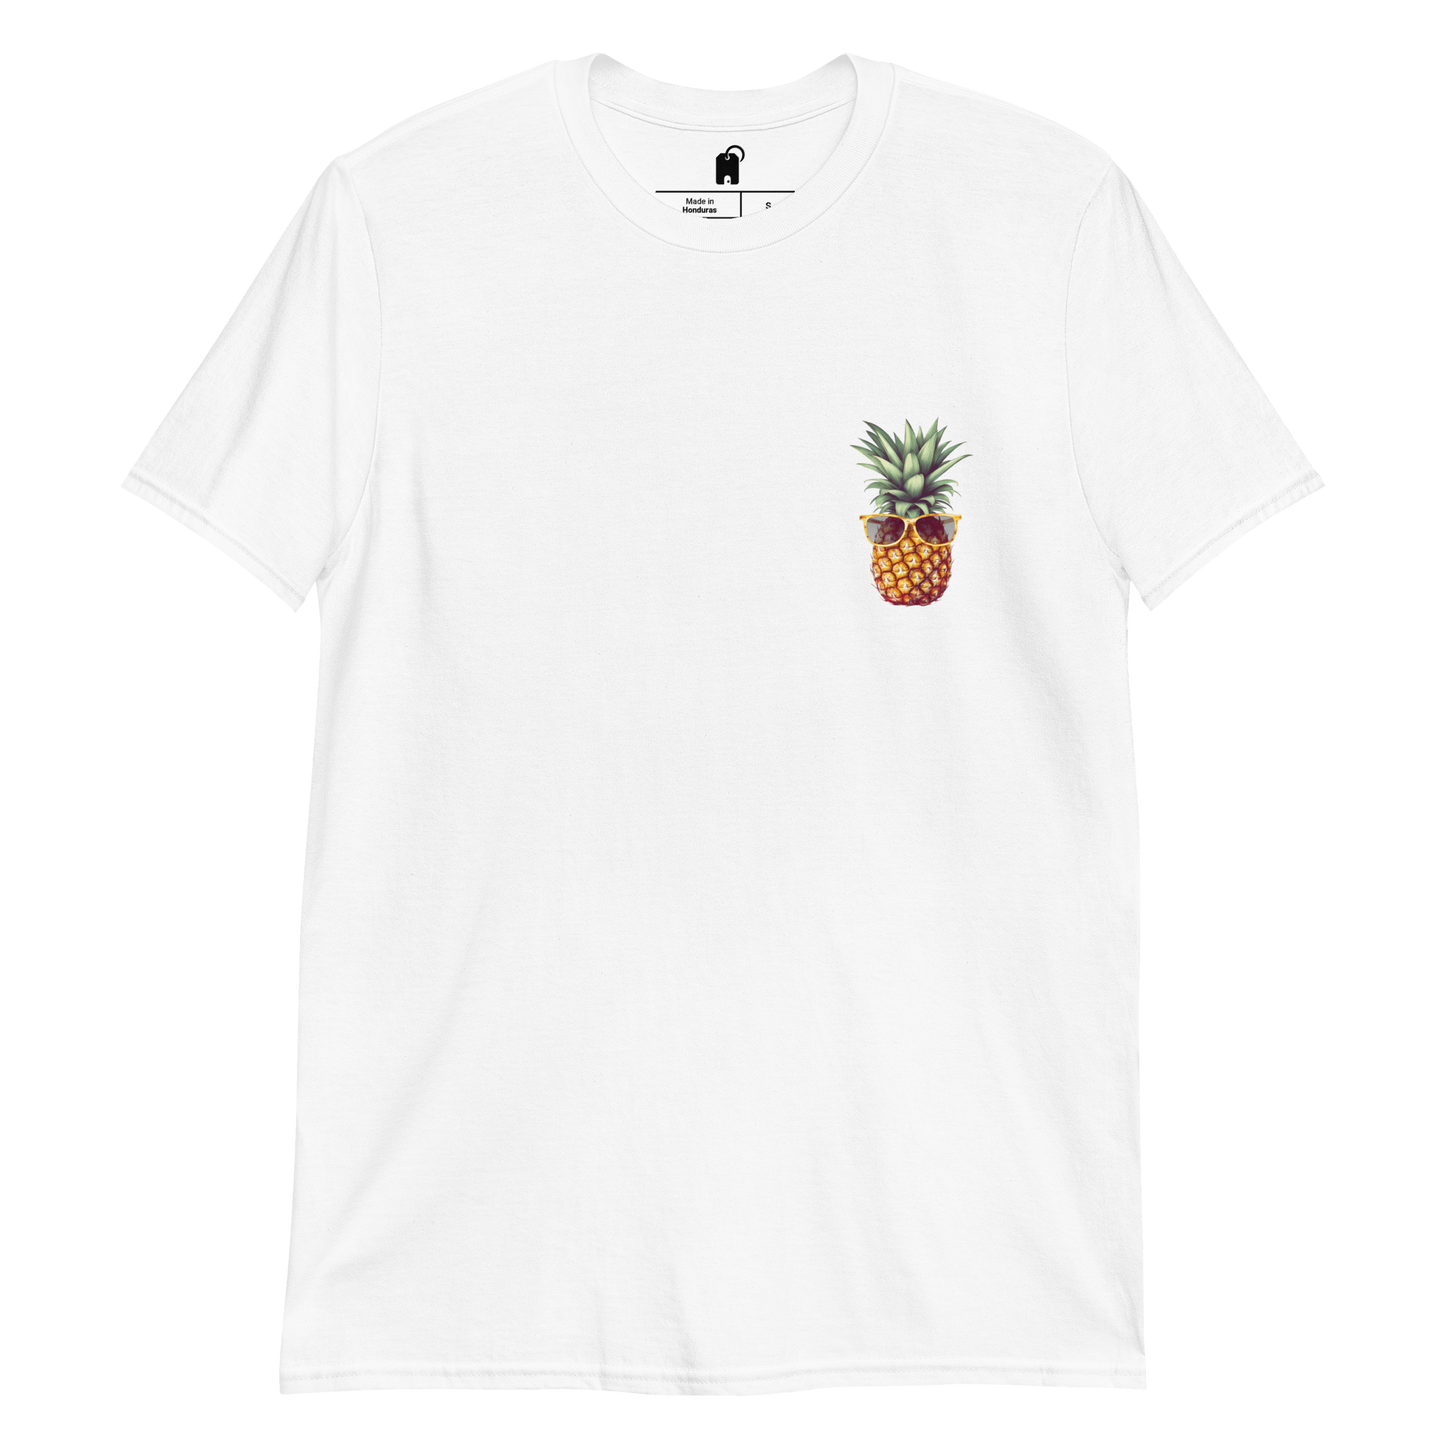 Tropical Essence: Minimalist Pineapple Left Chest T-Shirt with a Pop Art Twist